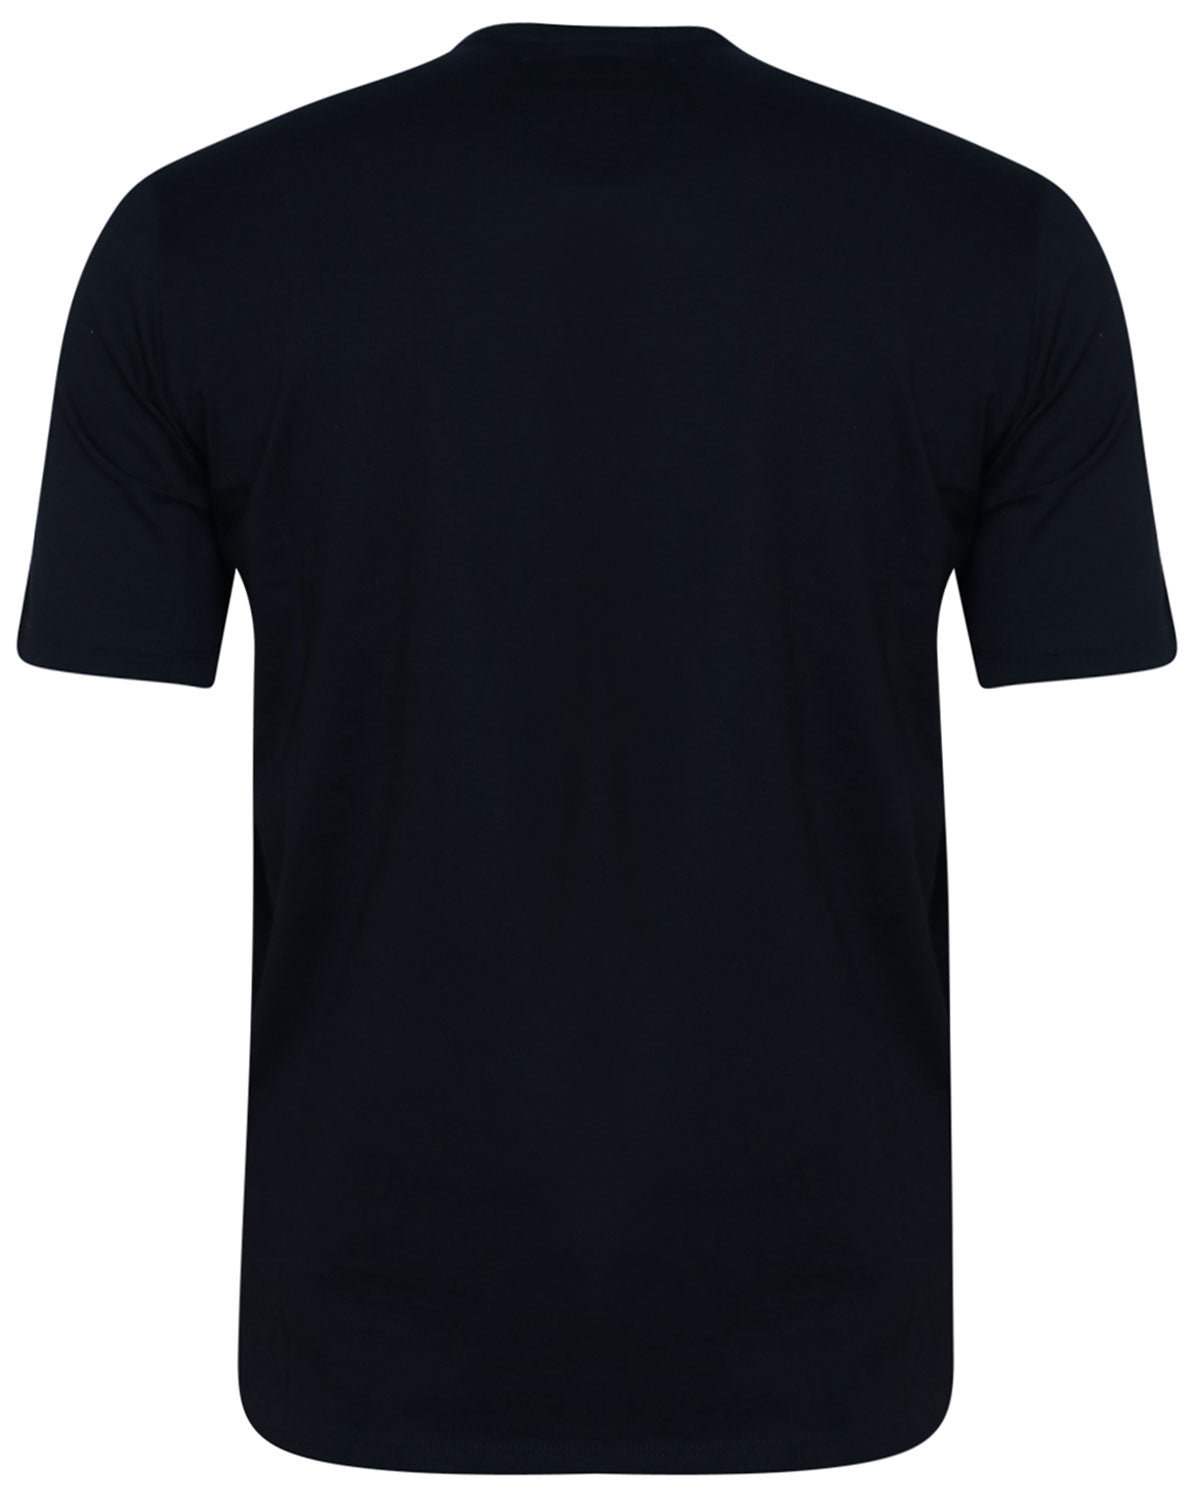 Black Giza Cotton Short Sleeve T-Shirt